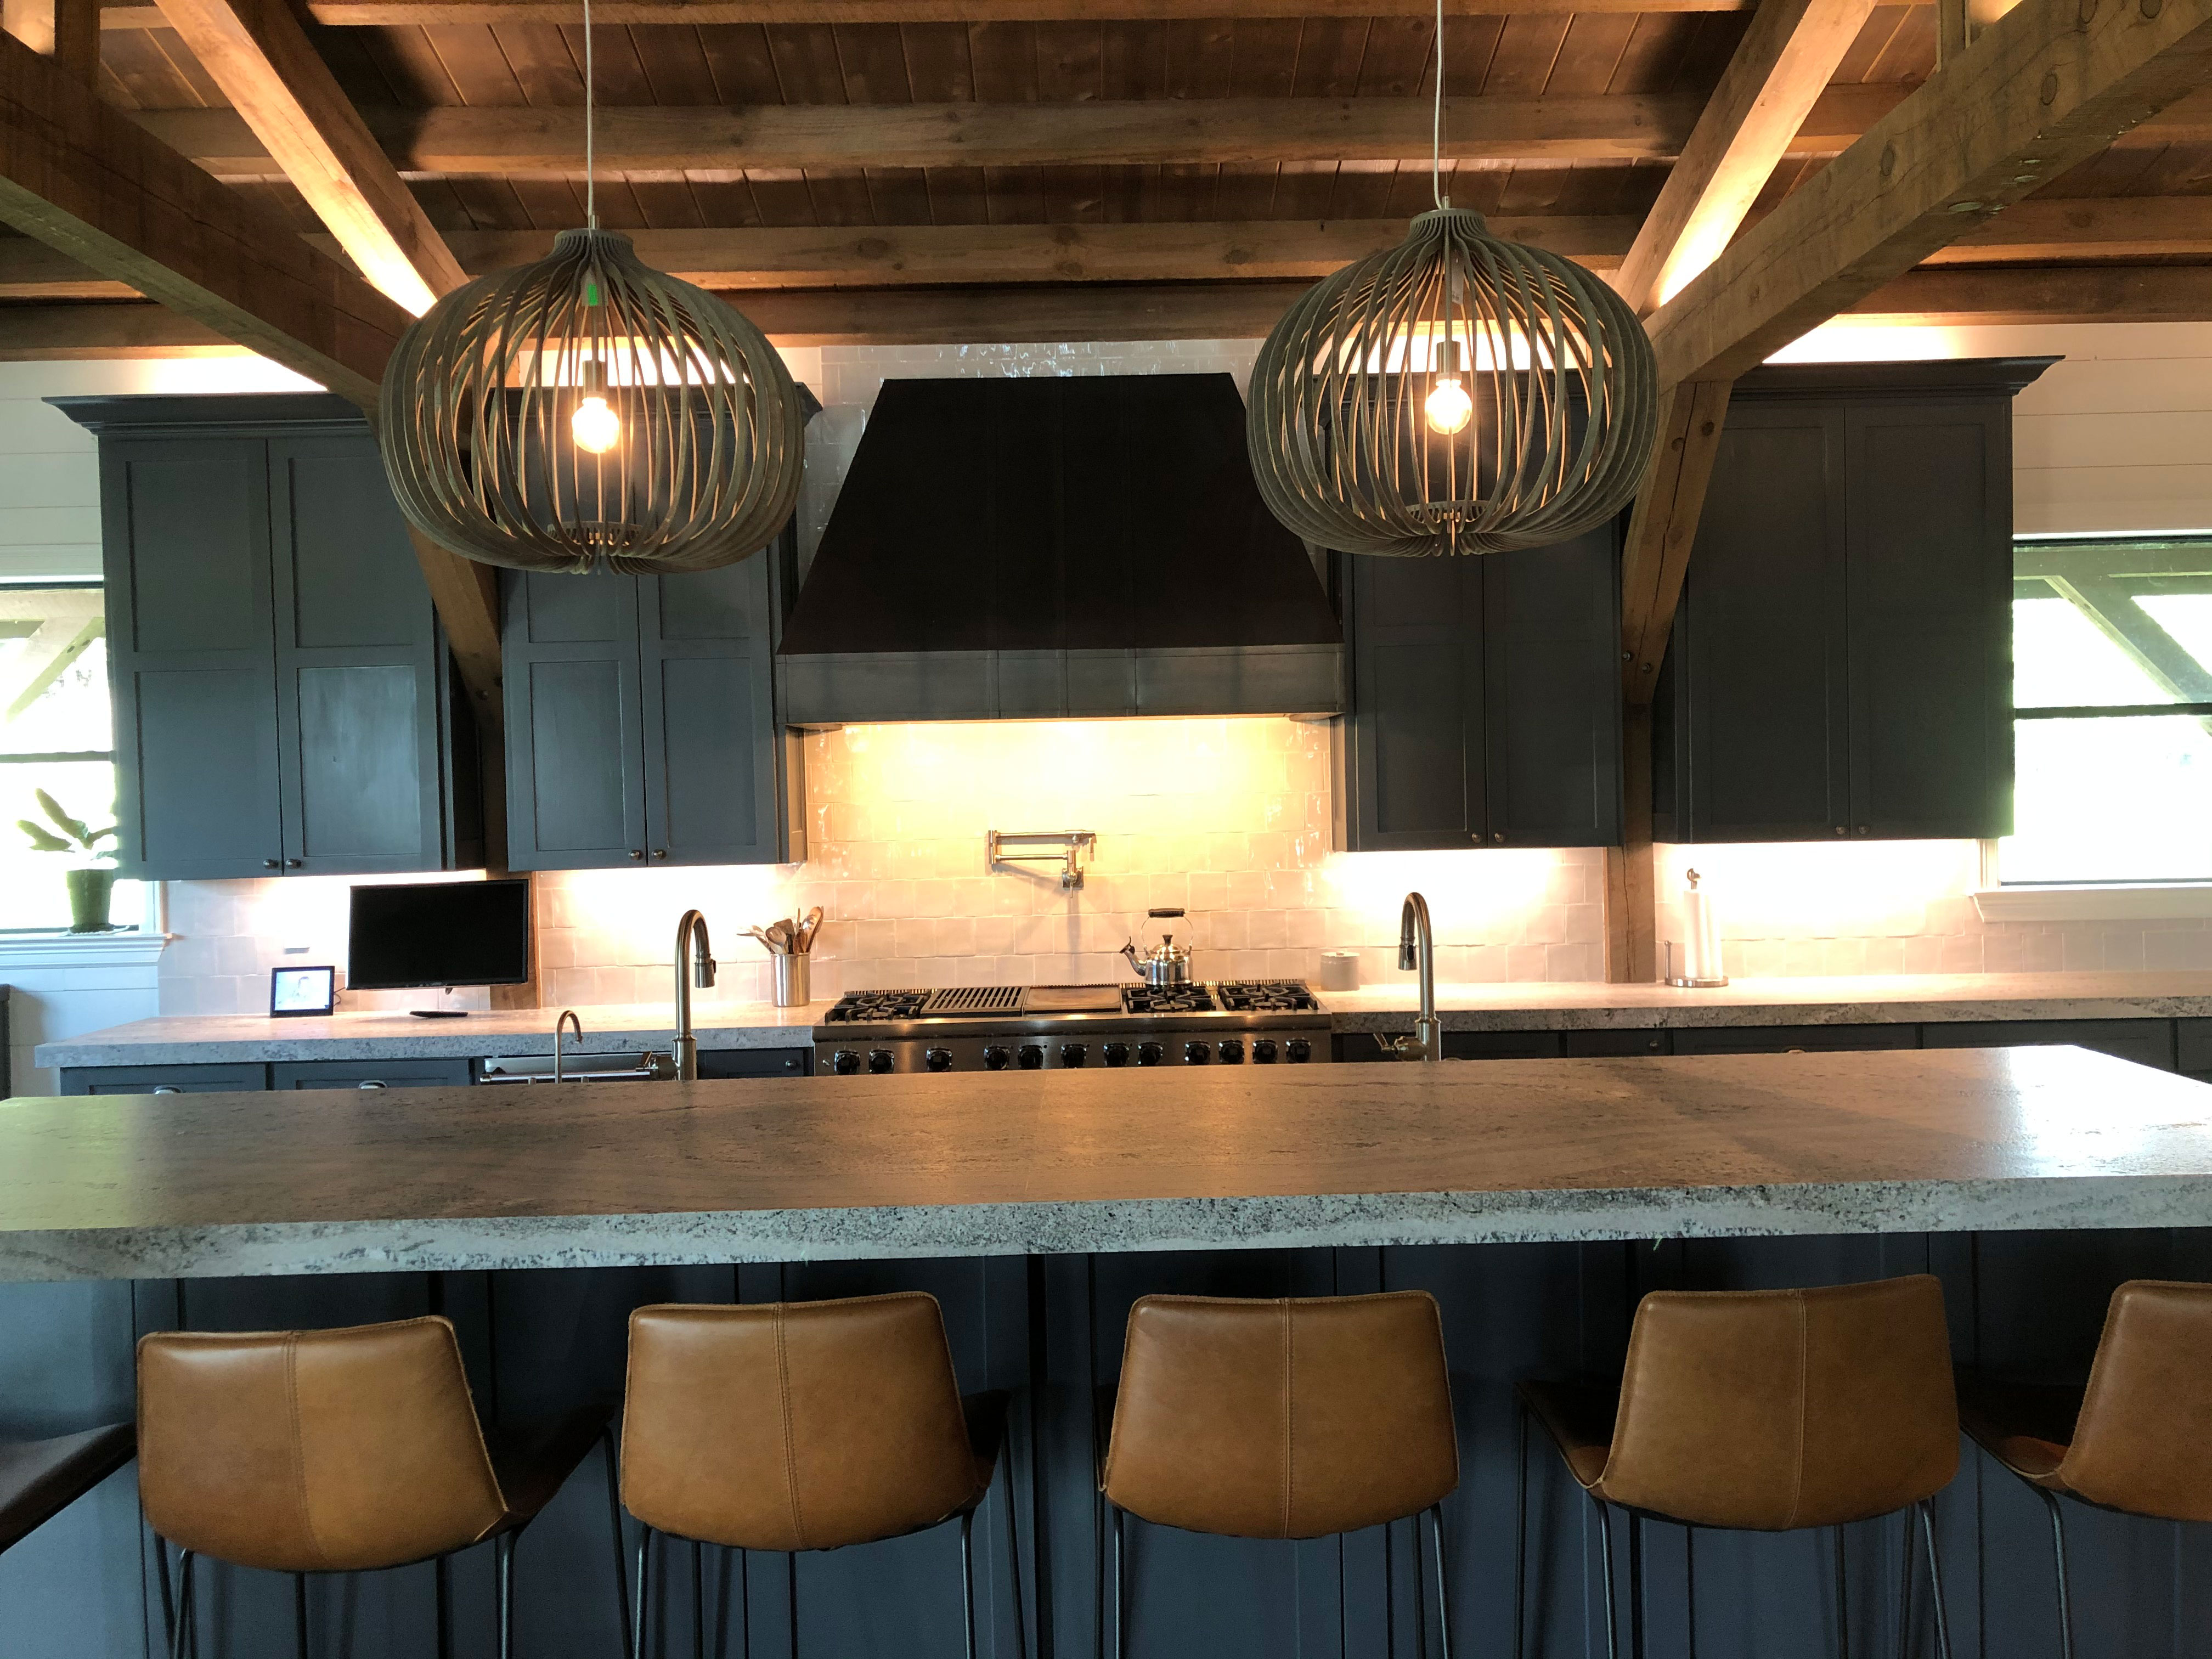 Contemporary kitchen with stylish kitchen table idea, grey kitchen cabinets, grey kitchen countertops and marble backsplash